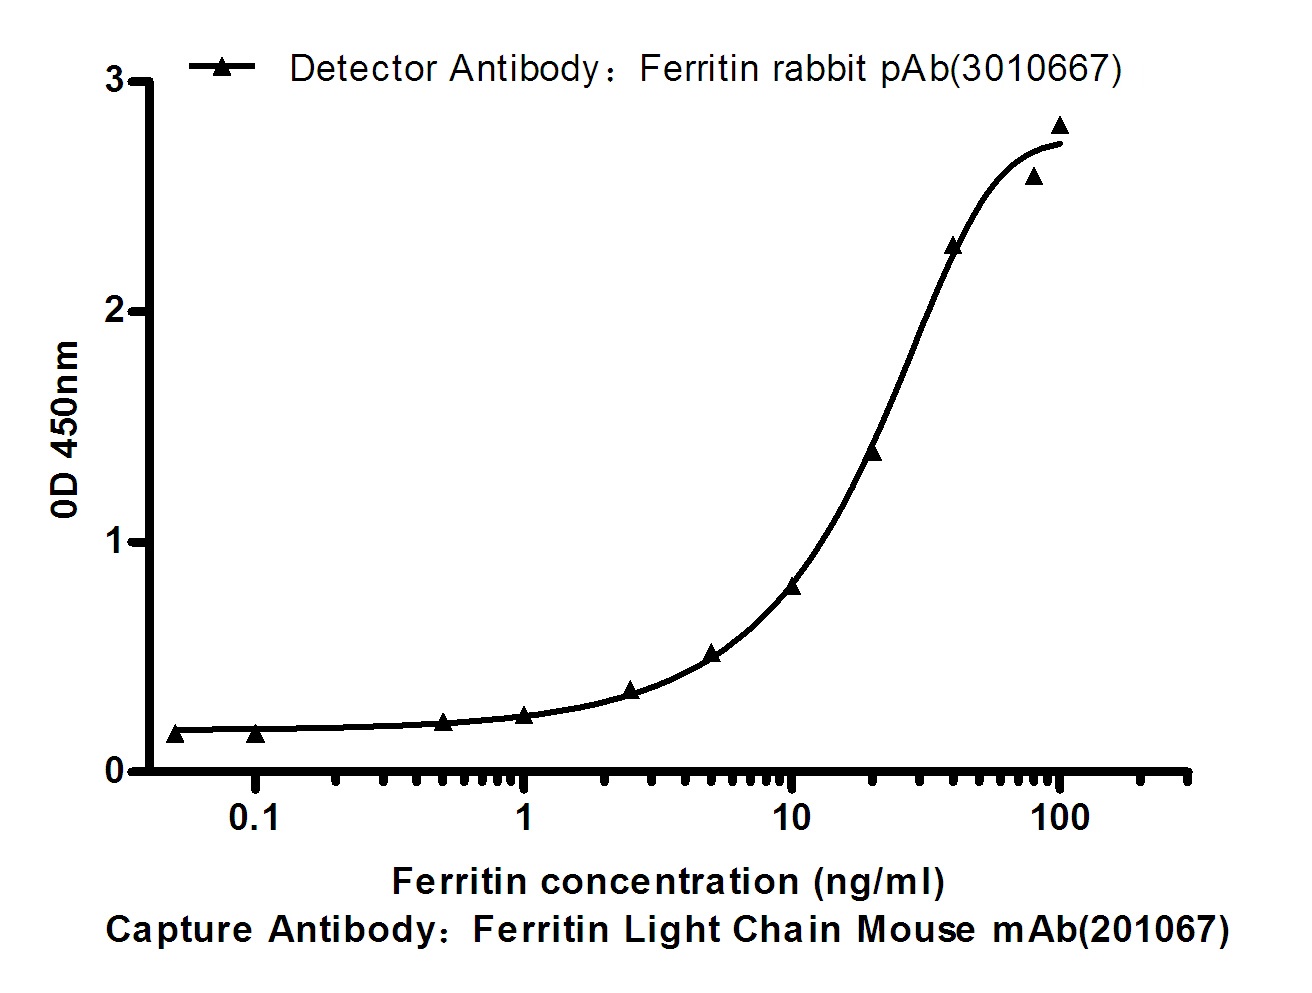 Standard Curve for Ferritin: Capture Antibody Mouse mAb (201067,Ferritin Light Chain Mouse mAb) to Ferritin at 2u03bcg/ml and Detector Antibody Rabbit pAb(3010667,Ferritin rabbit pAb)to Ferritin at 0.5u03bcg/ml.